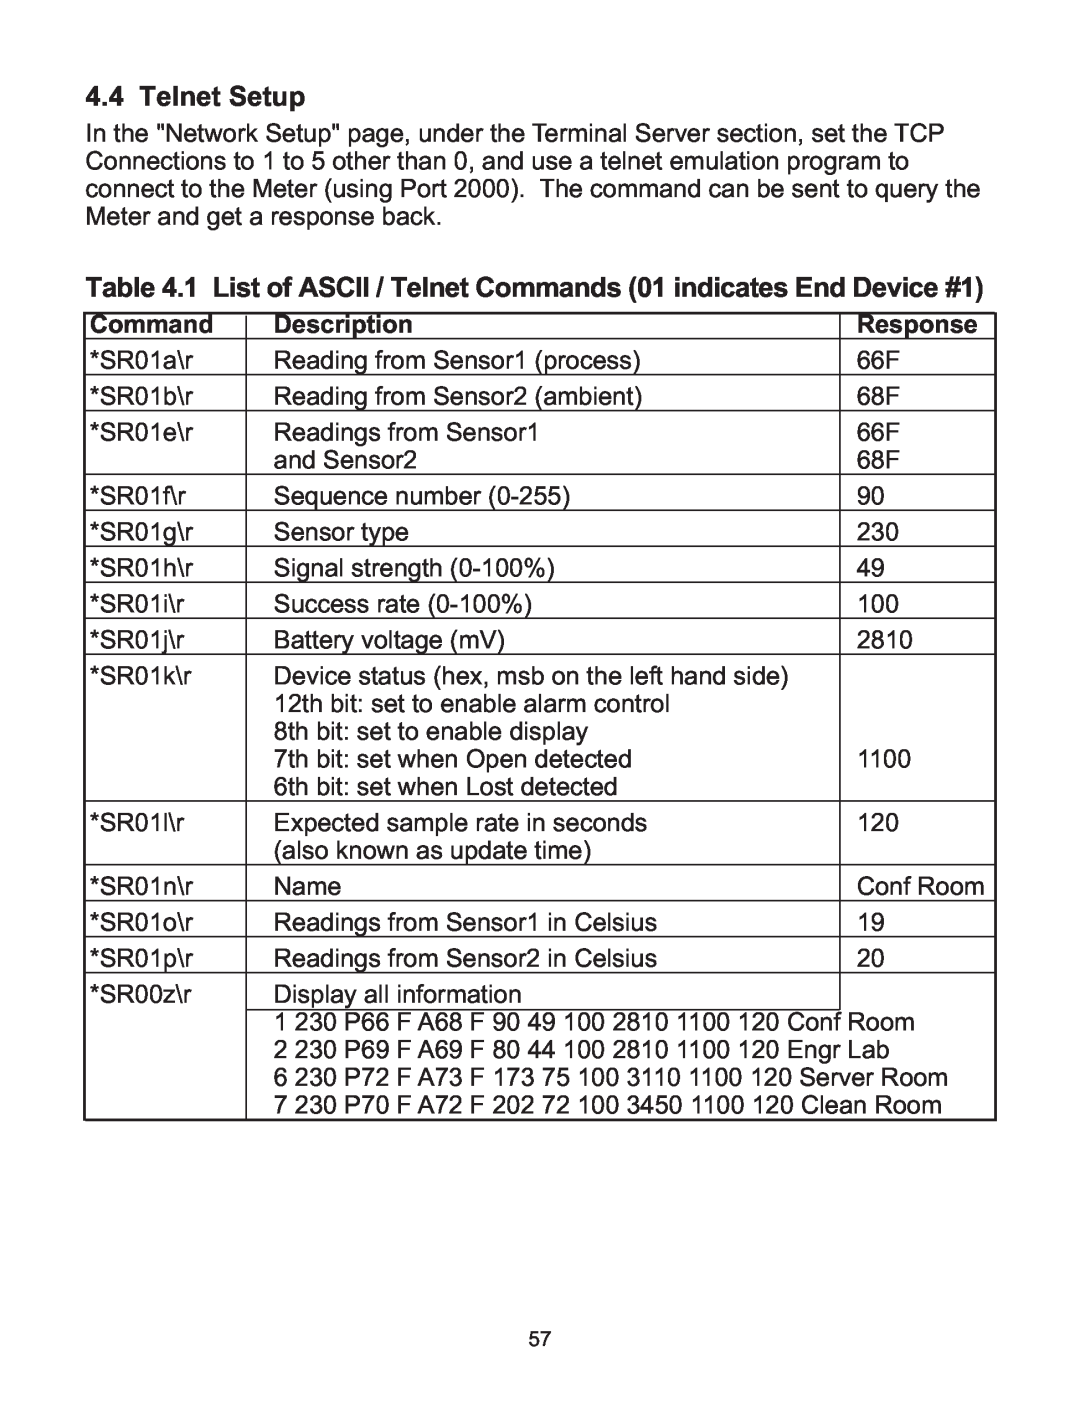 Omega WI8XX-U manual Telnet Setup, 1 List of ASCII / Telnet Commands 01 indicates End Device #1, Description, Response 